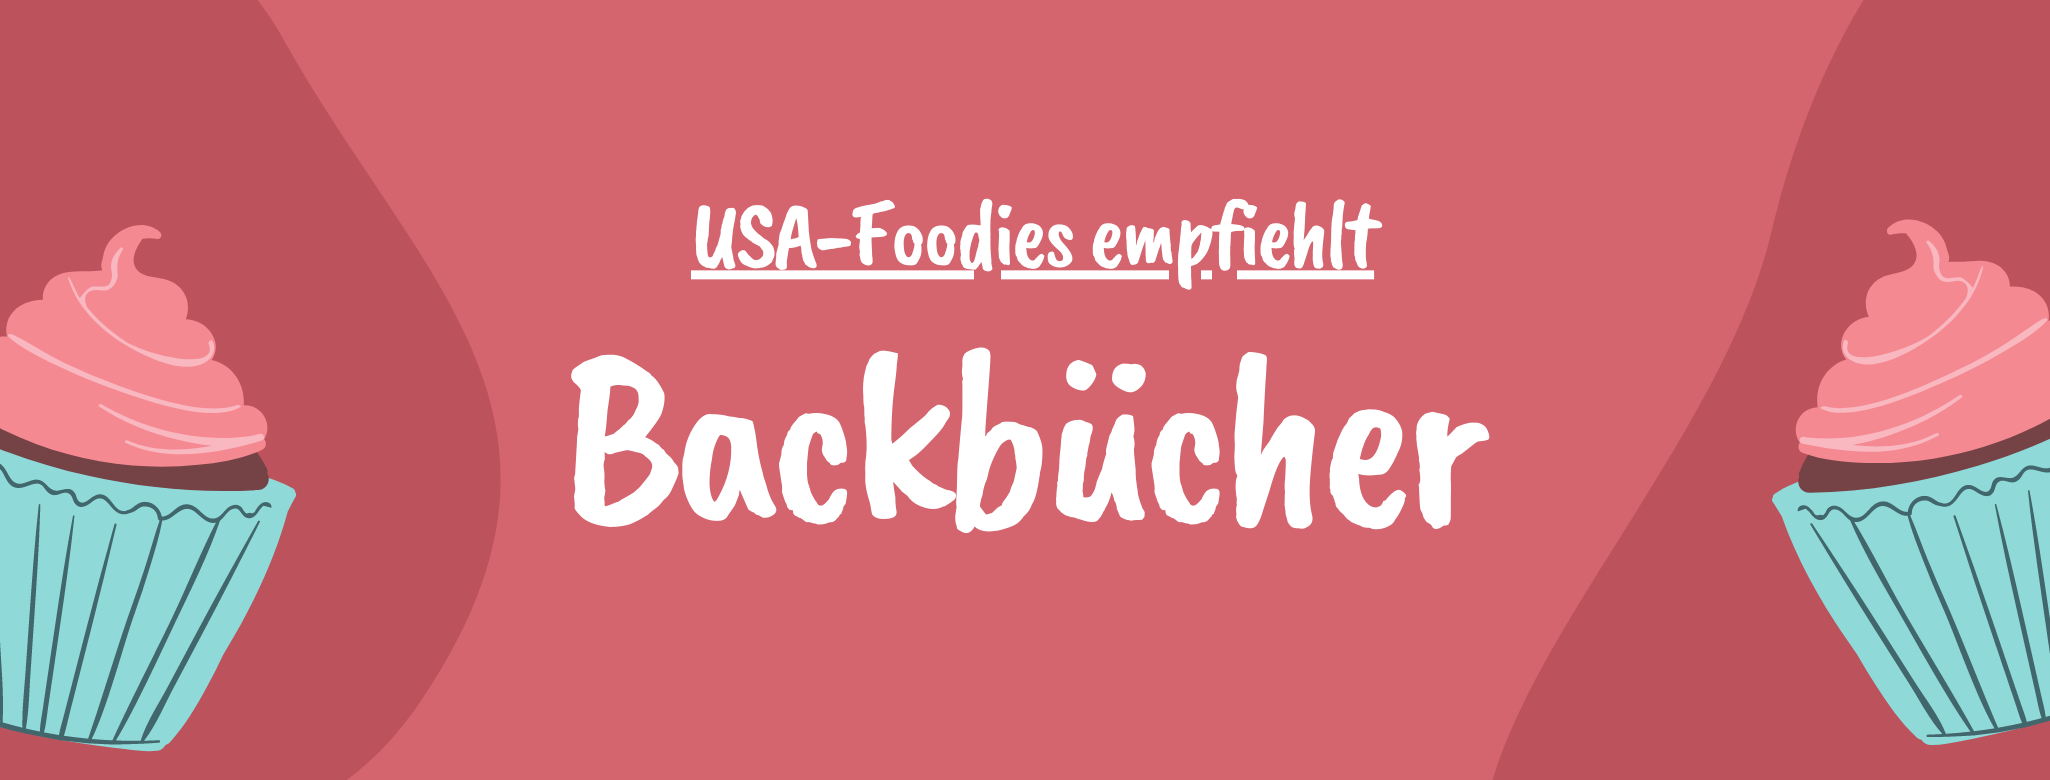 , Empfehlung: USA Backbücher, USA-Foodies